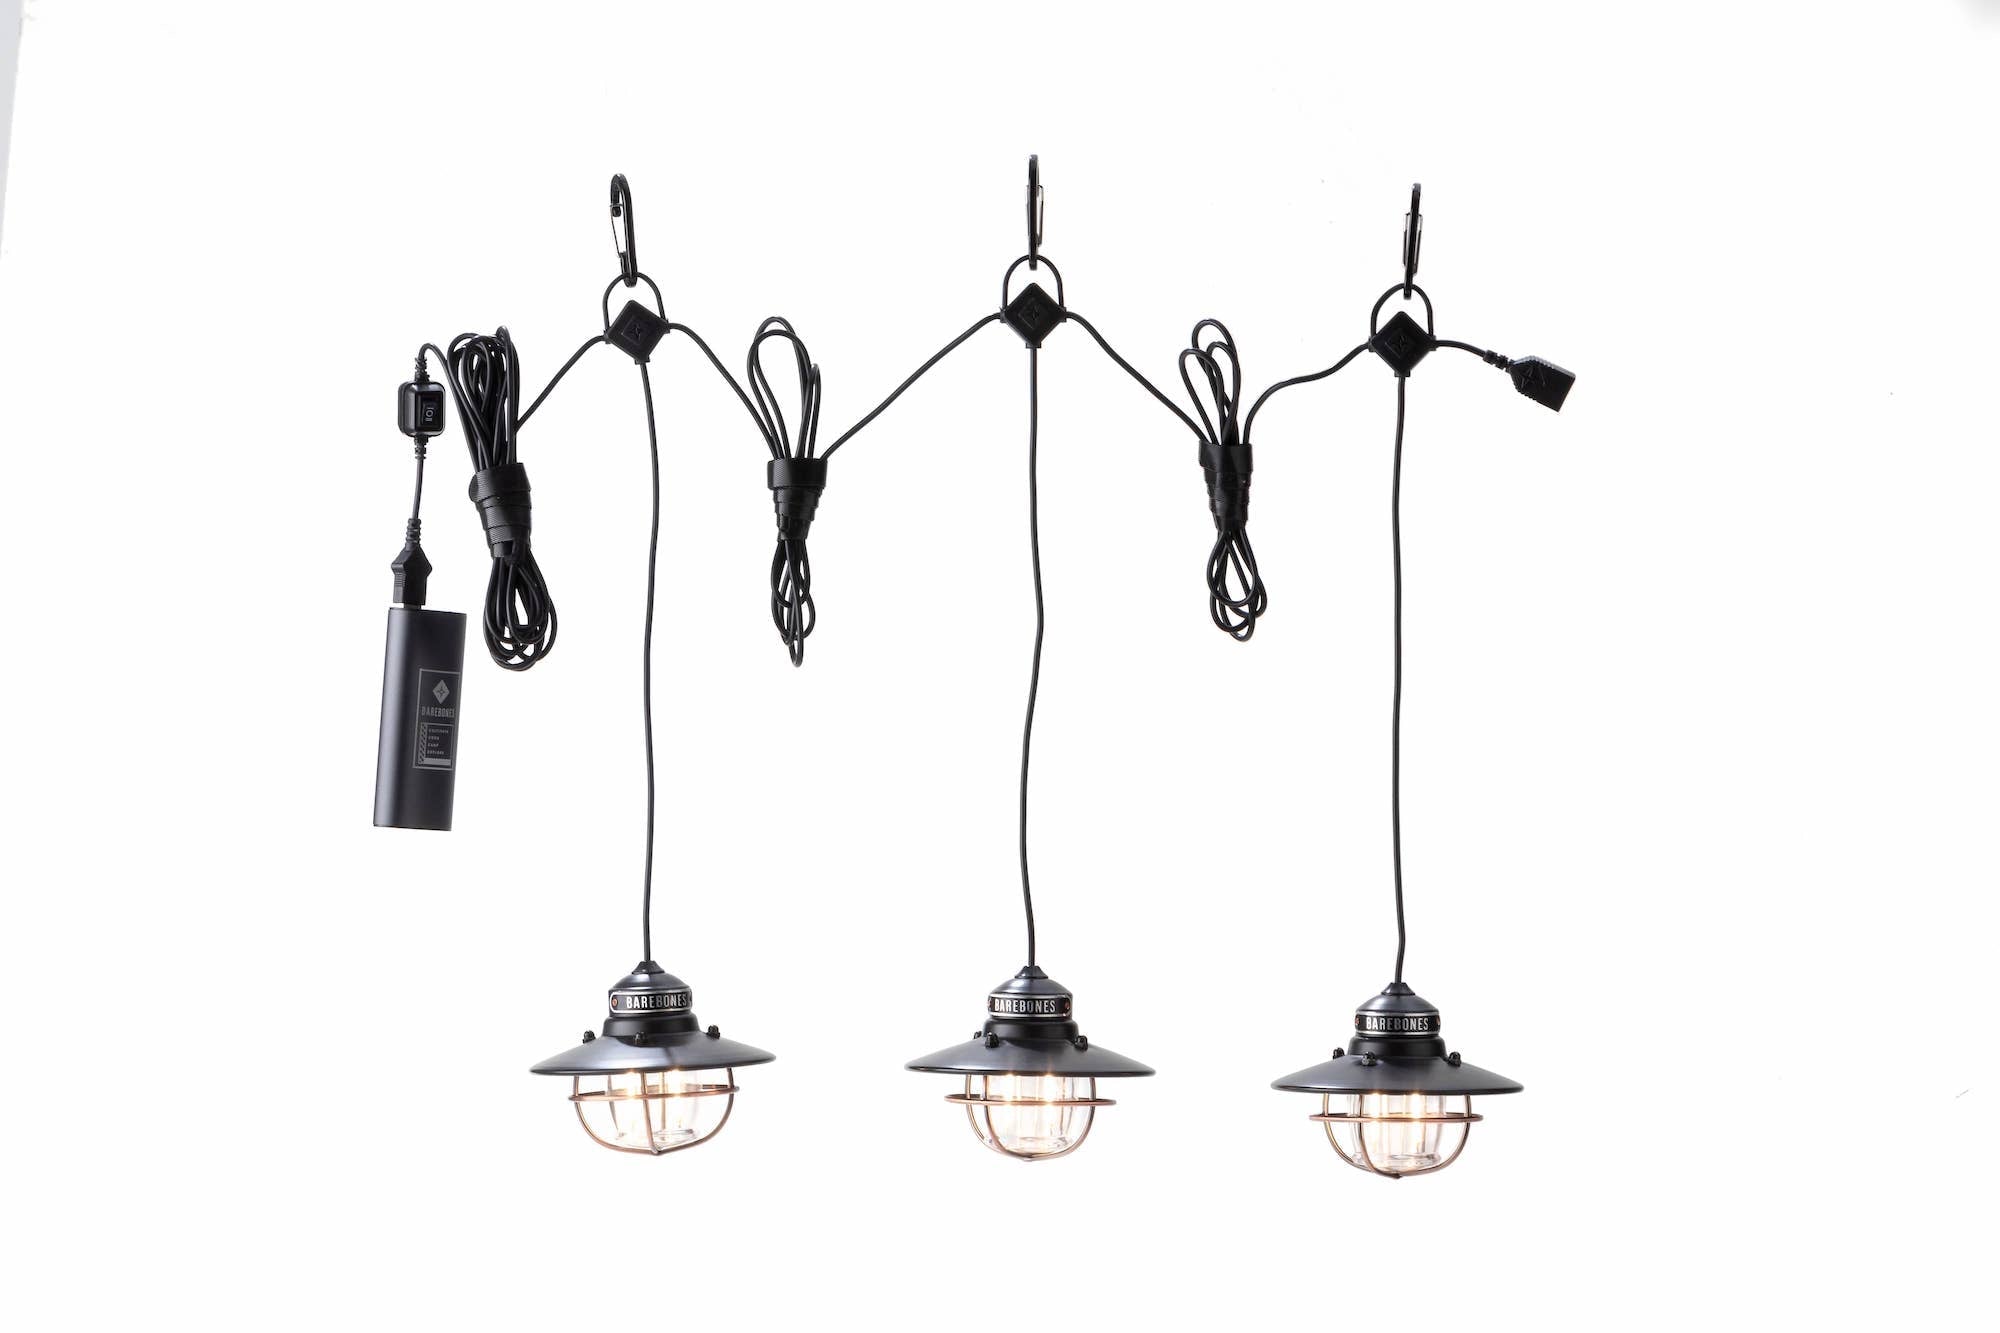 Barebones | Edison String Hanging Outdoor Lights With USB Port, Lanterns, Barebones, Defiance Outdoor Gear Co.